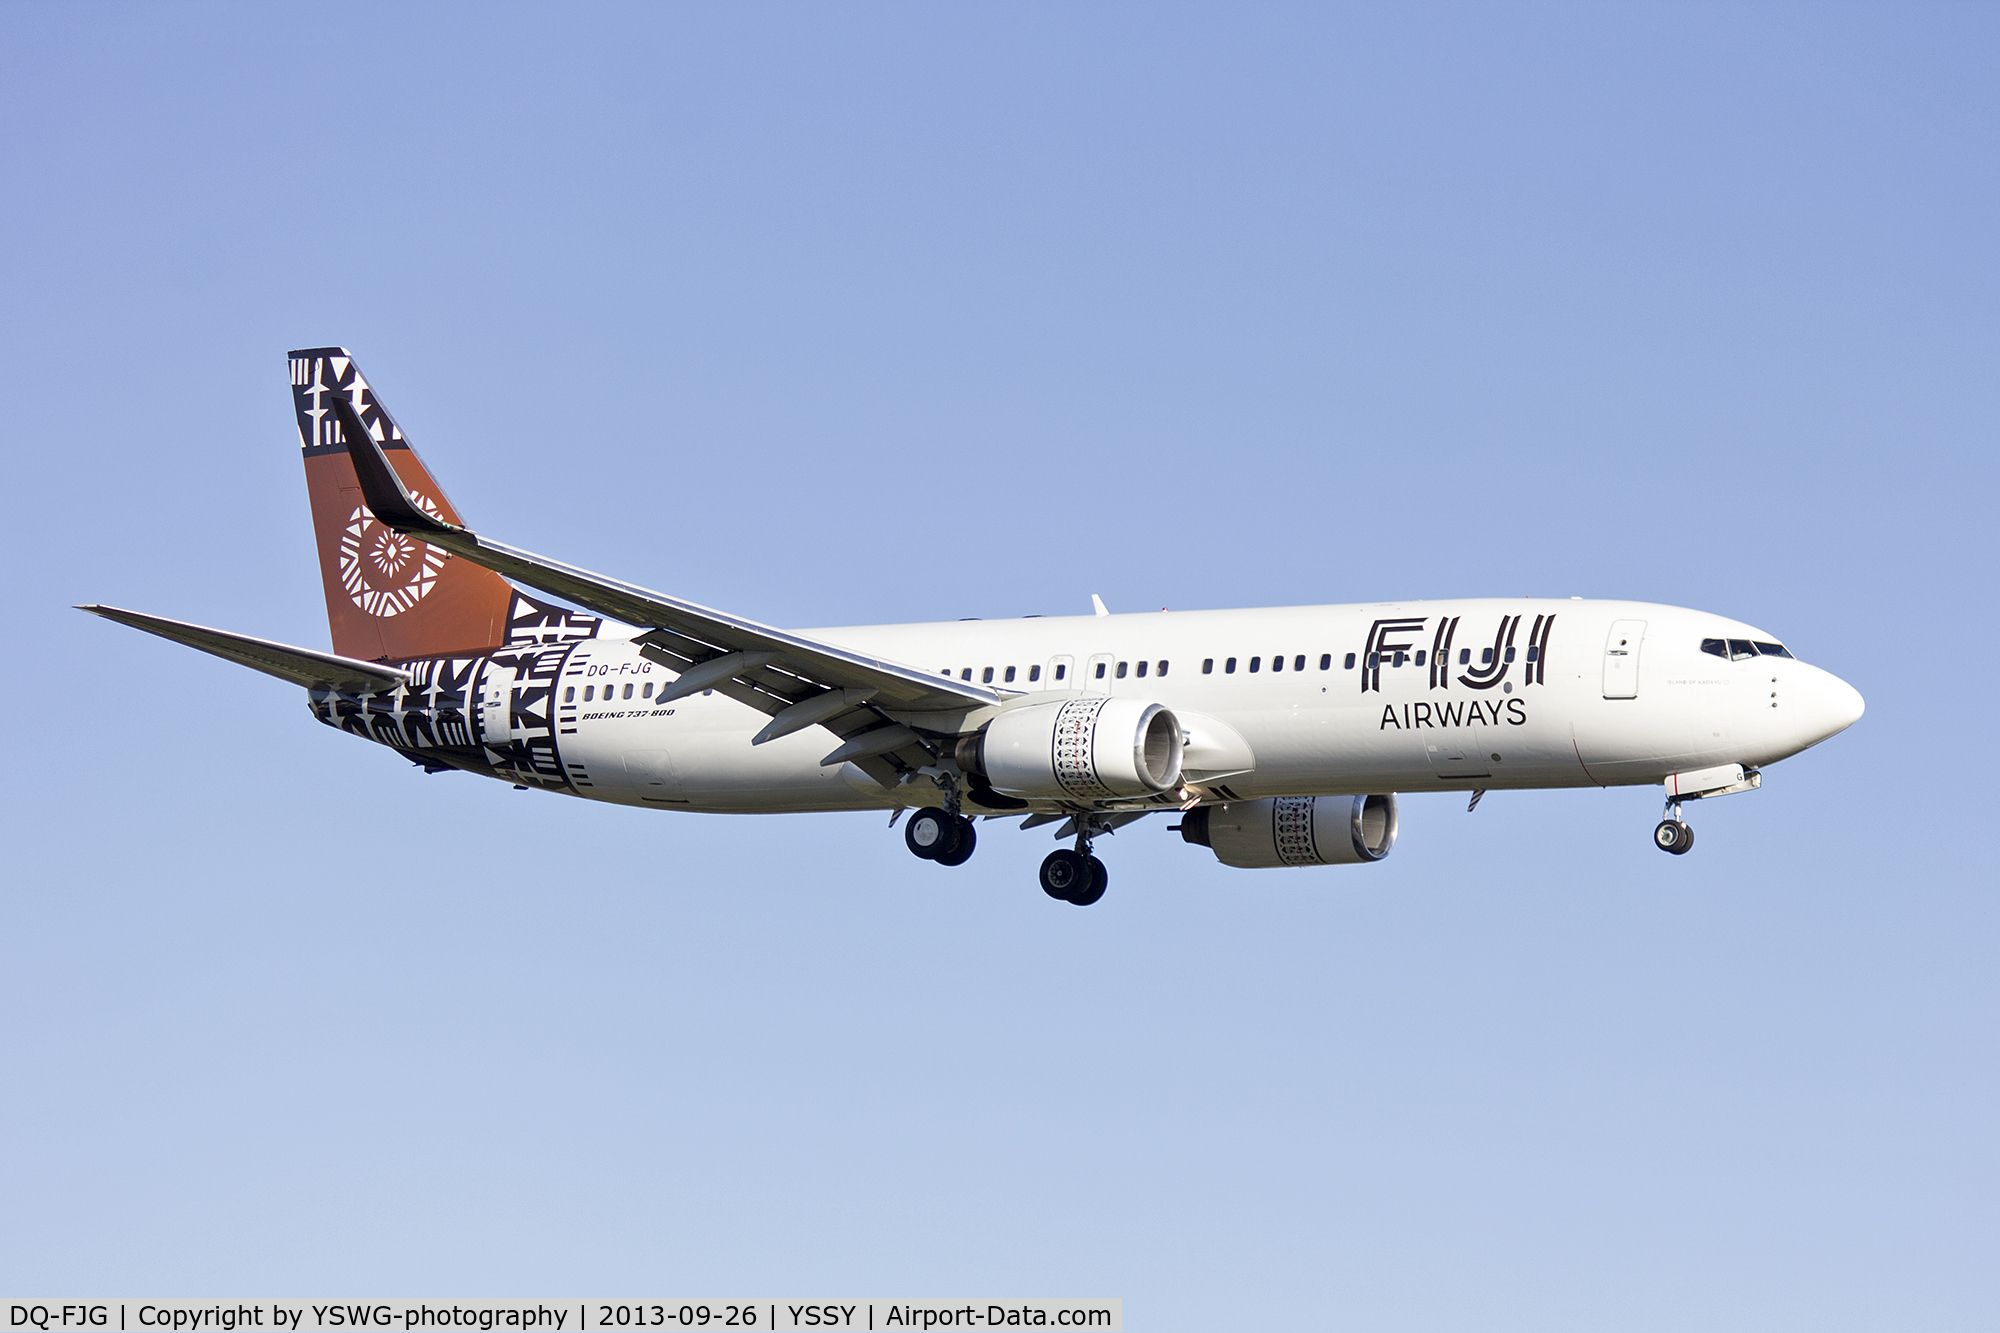 DQ-FJG, 1999 Boeing 737-8X2 C/N 29968, Fuji Airways (DQ-FJG) Boeing 737-8X2(WL) on approach to runway 25 at Sydney Airport.